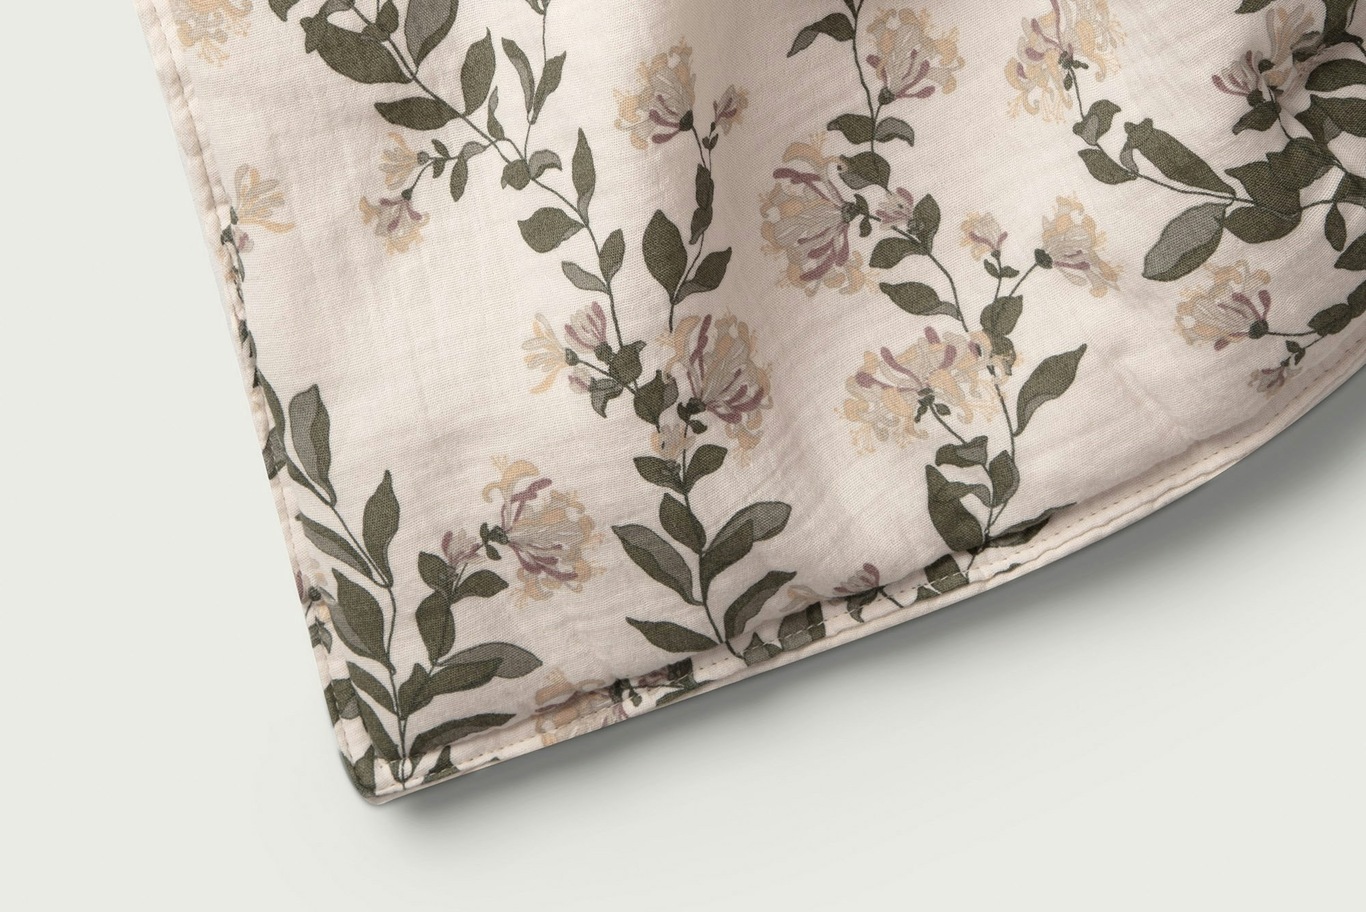 https://royaldesign.com/image/2/garbo-friends-honeysuckle-muslin-bed-set-0?w=800&quality=80